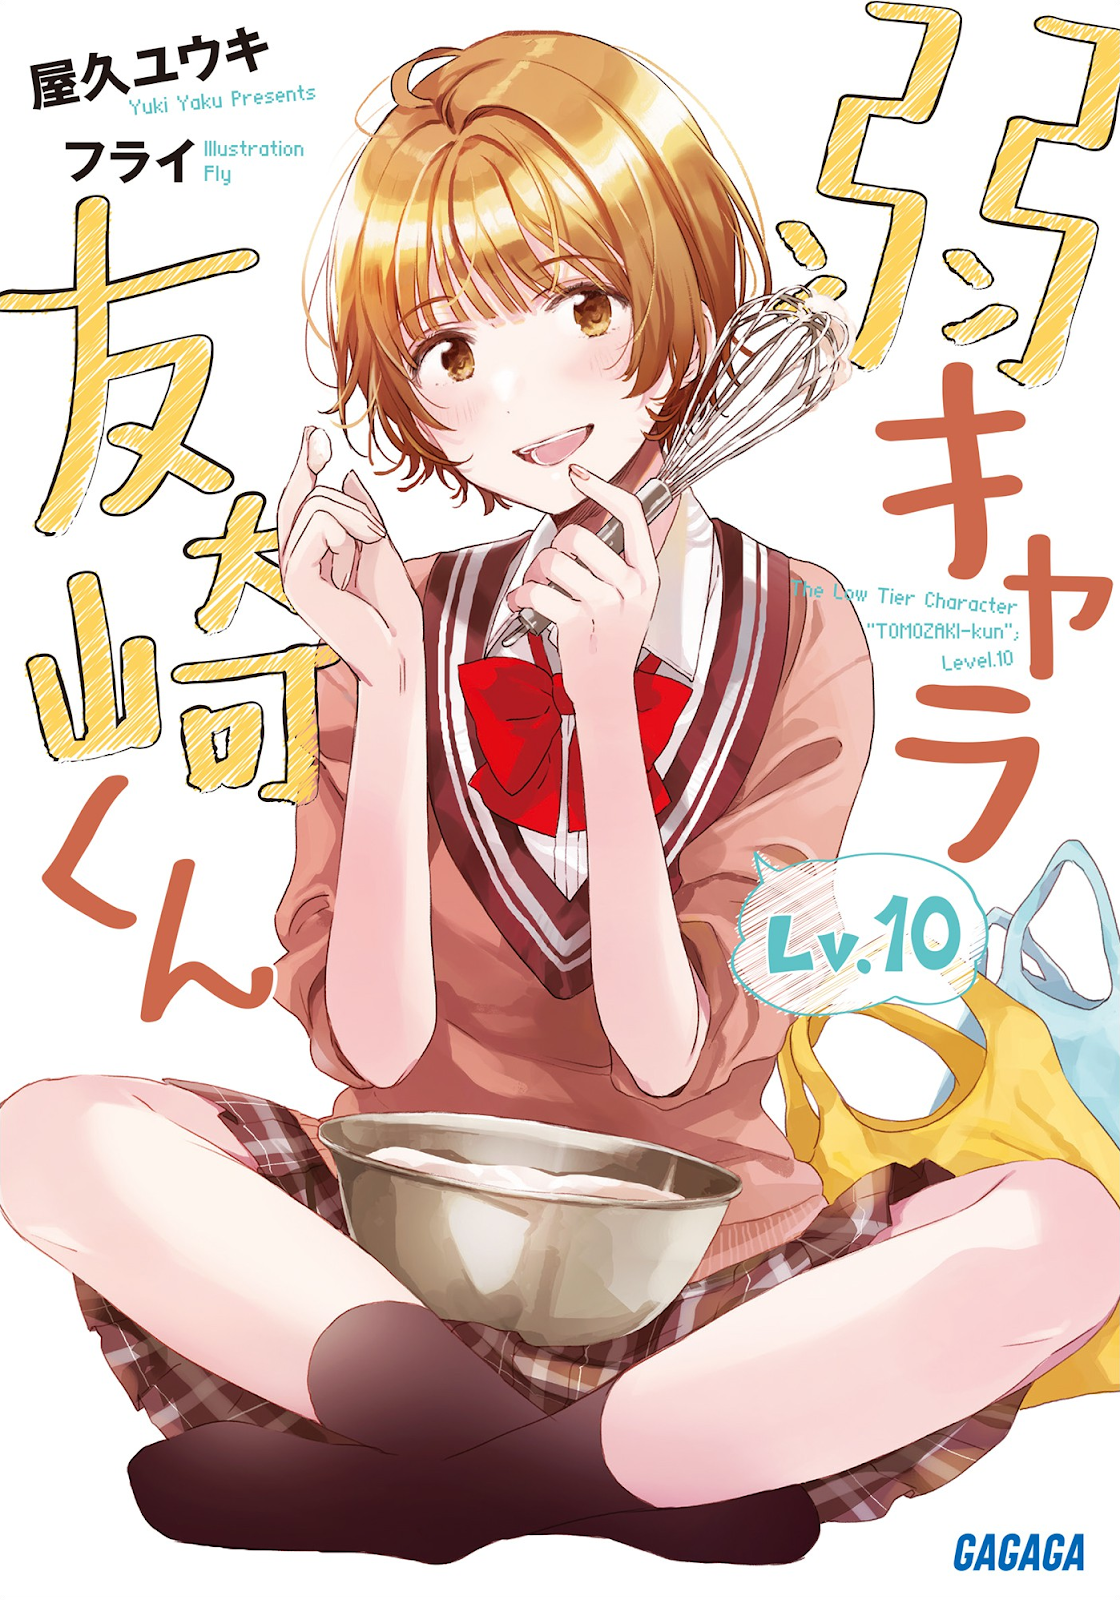 [Ruidrive] - Ilustrasi Light Novel Jaku-chara Tomozaki-kun - Volume 10 - 01